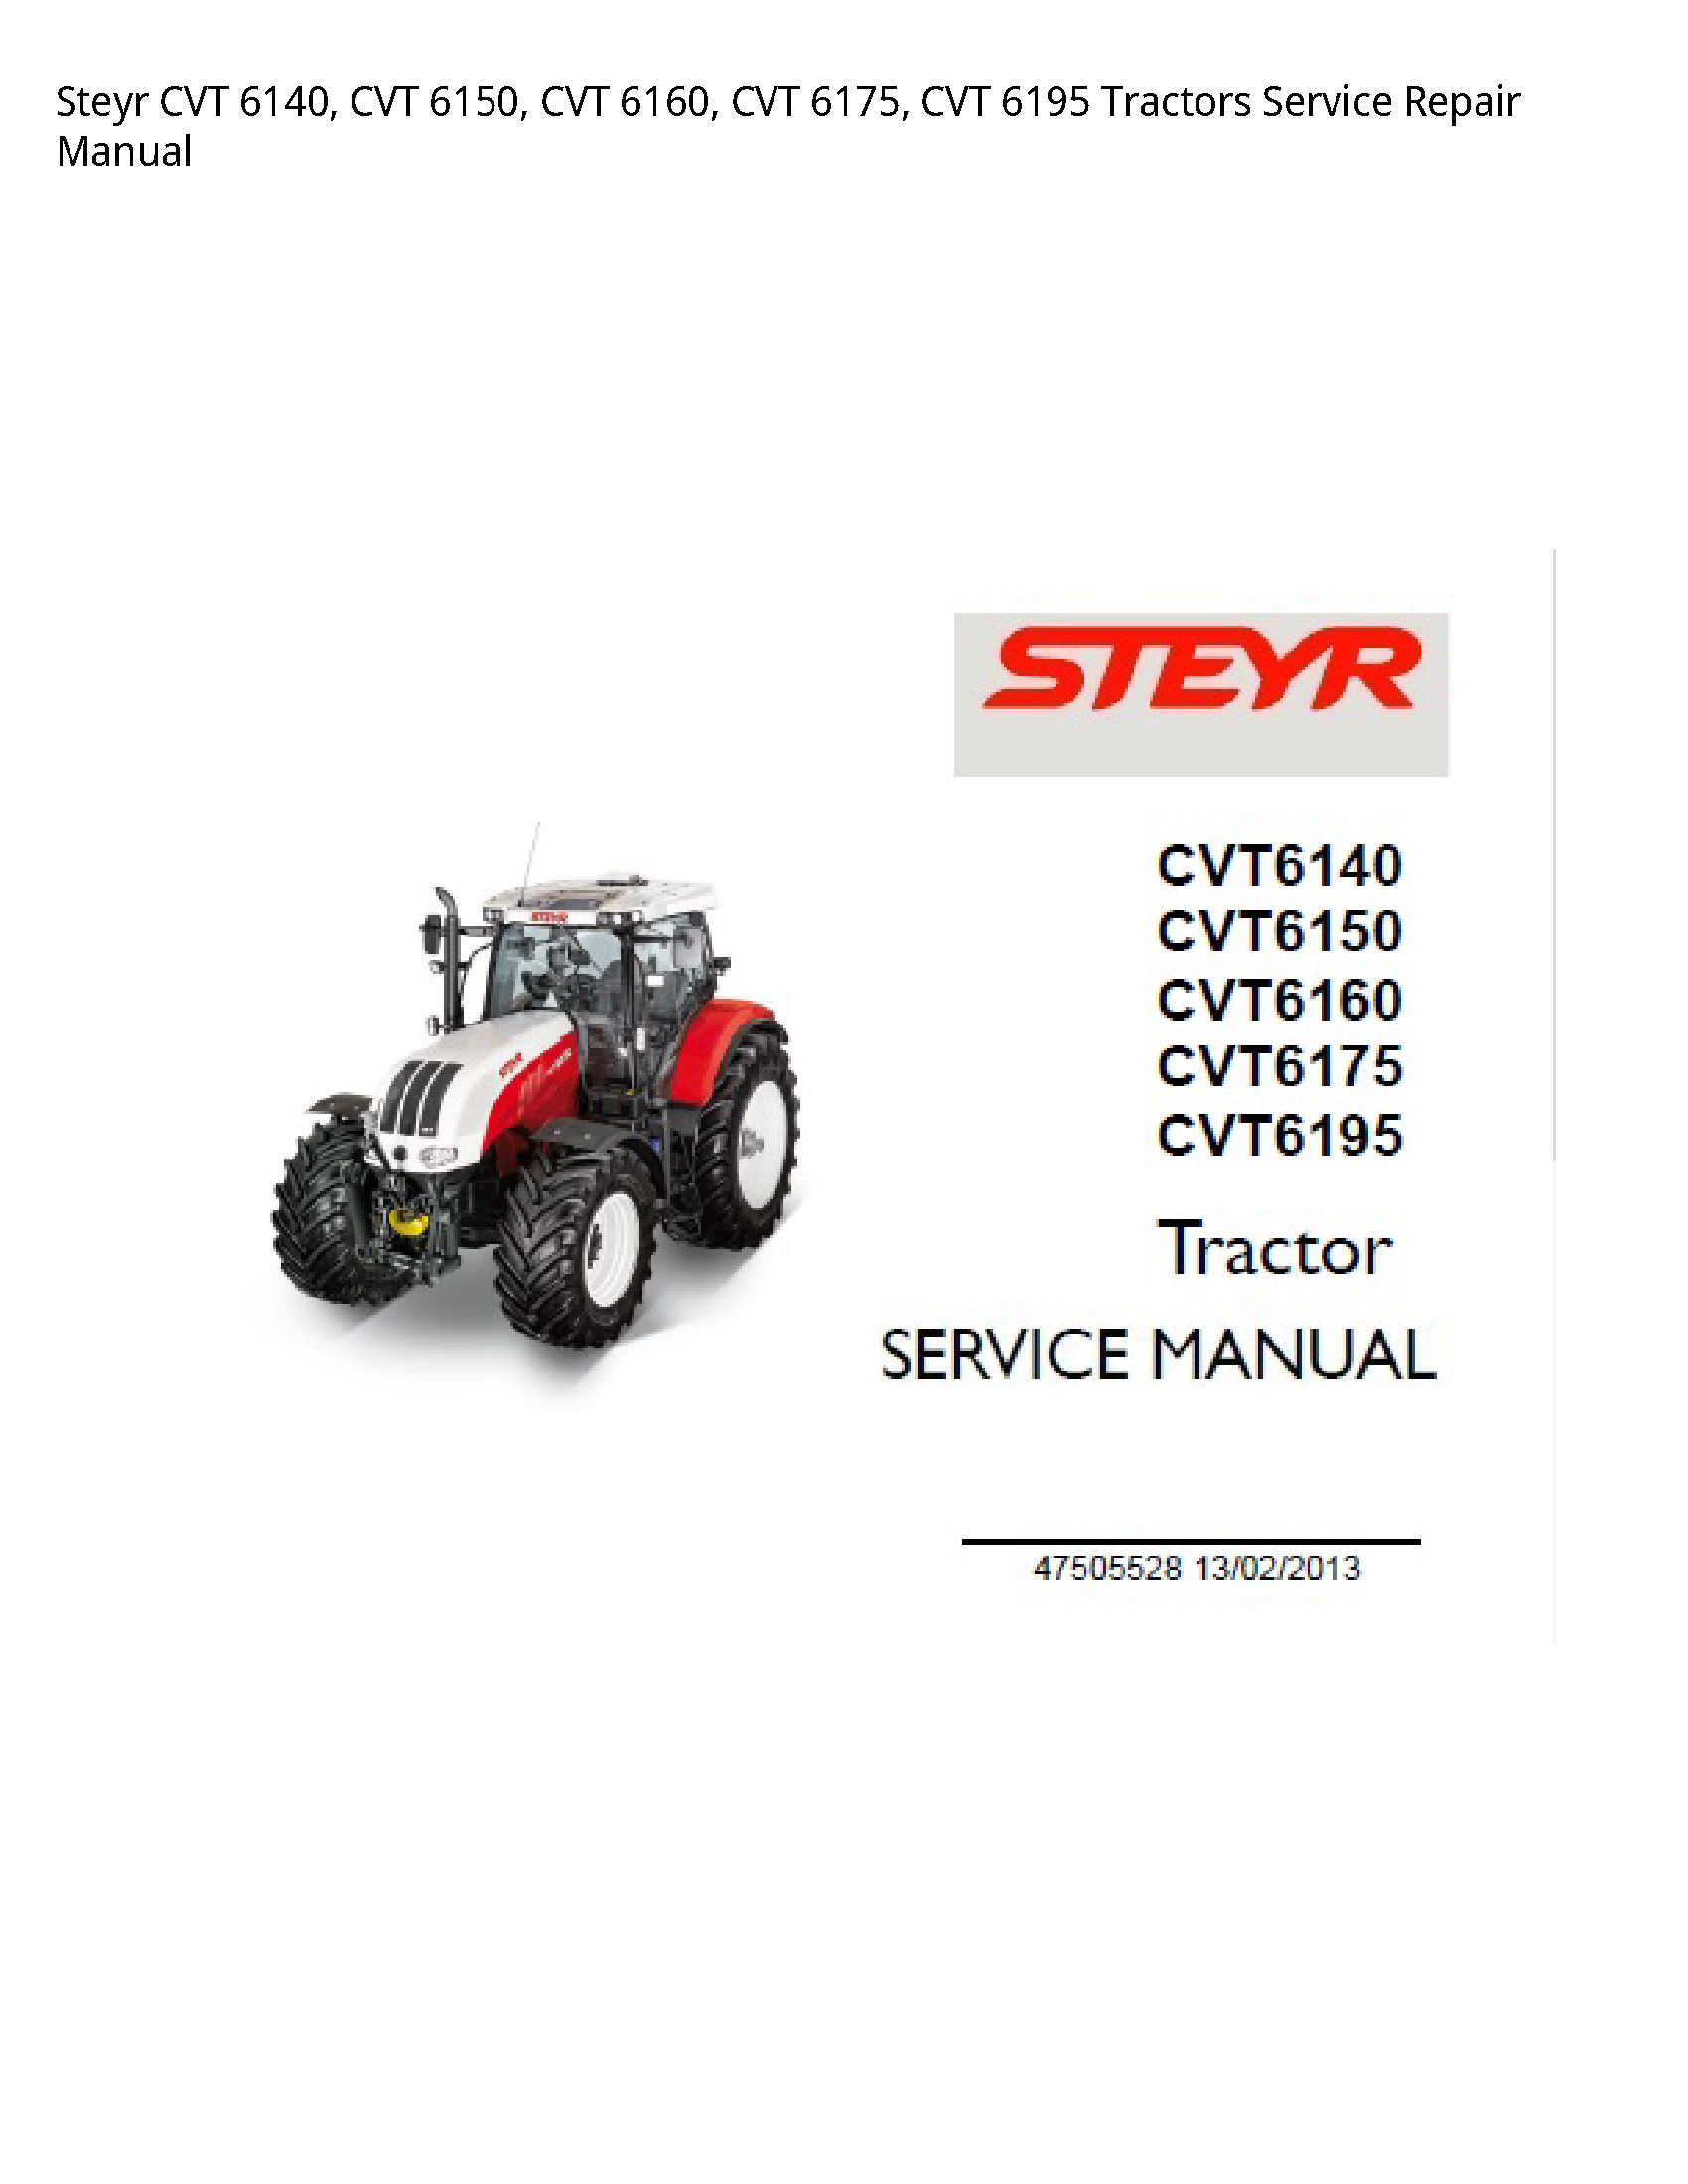 Steyr 6140 CVT CVT CVT CVT CVT Tractors manual